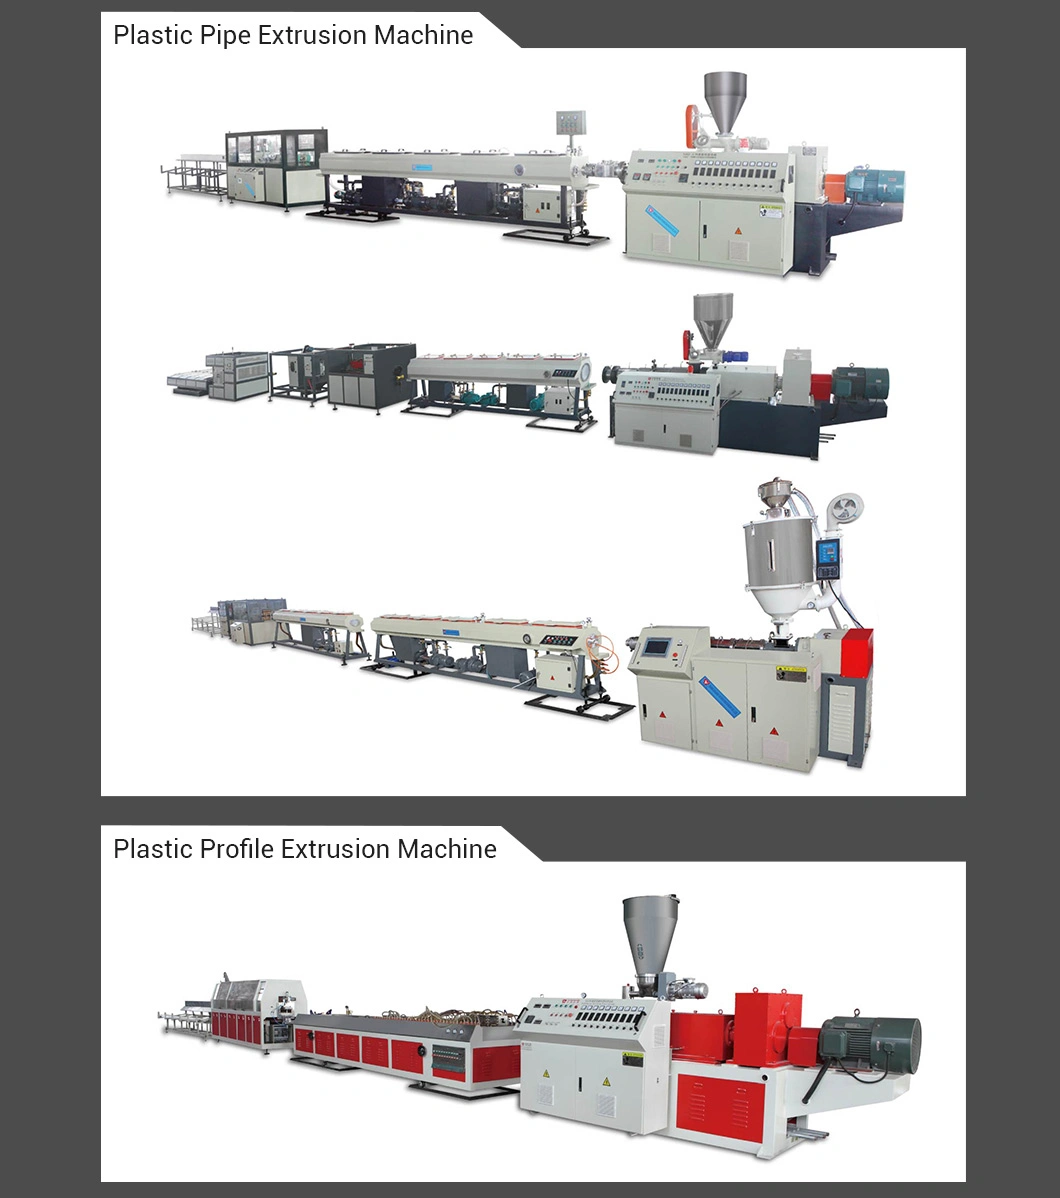 Yatong Plastic PP Recycling Pelletizing Line / PE PP Granulating Machine / Recycling Line